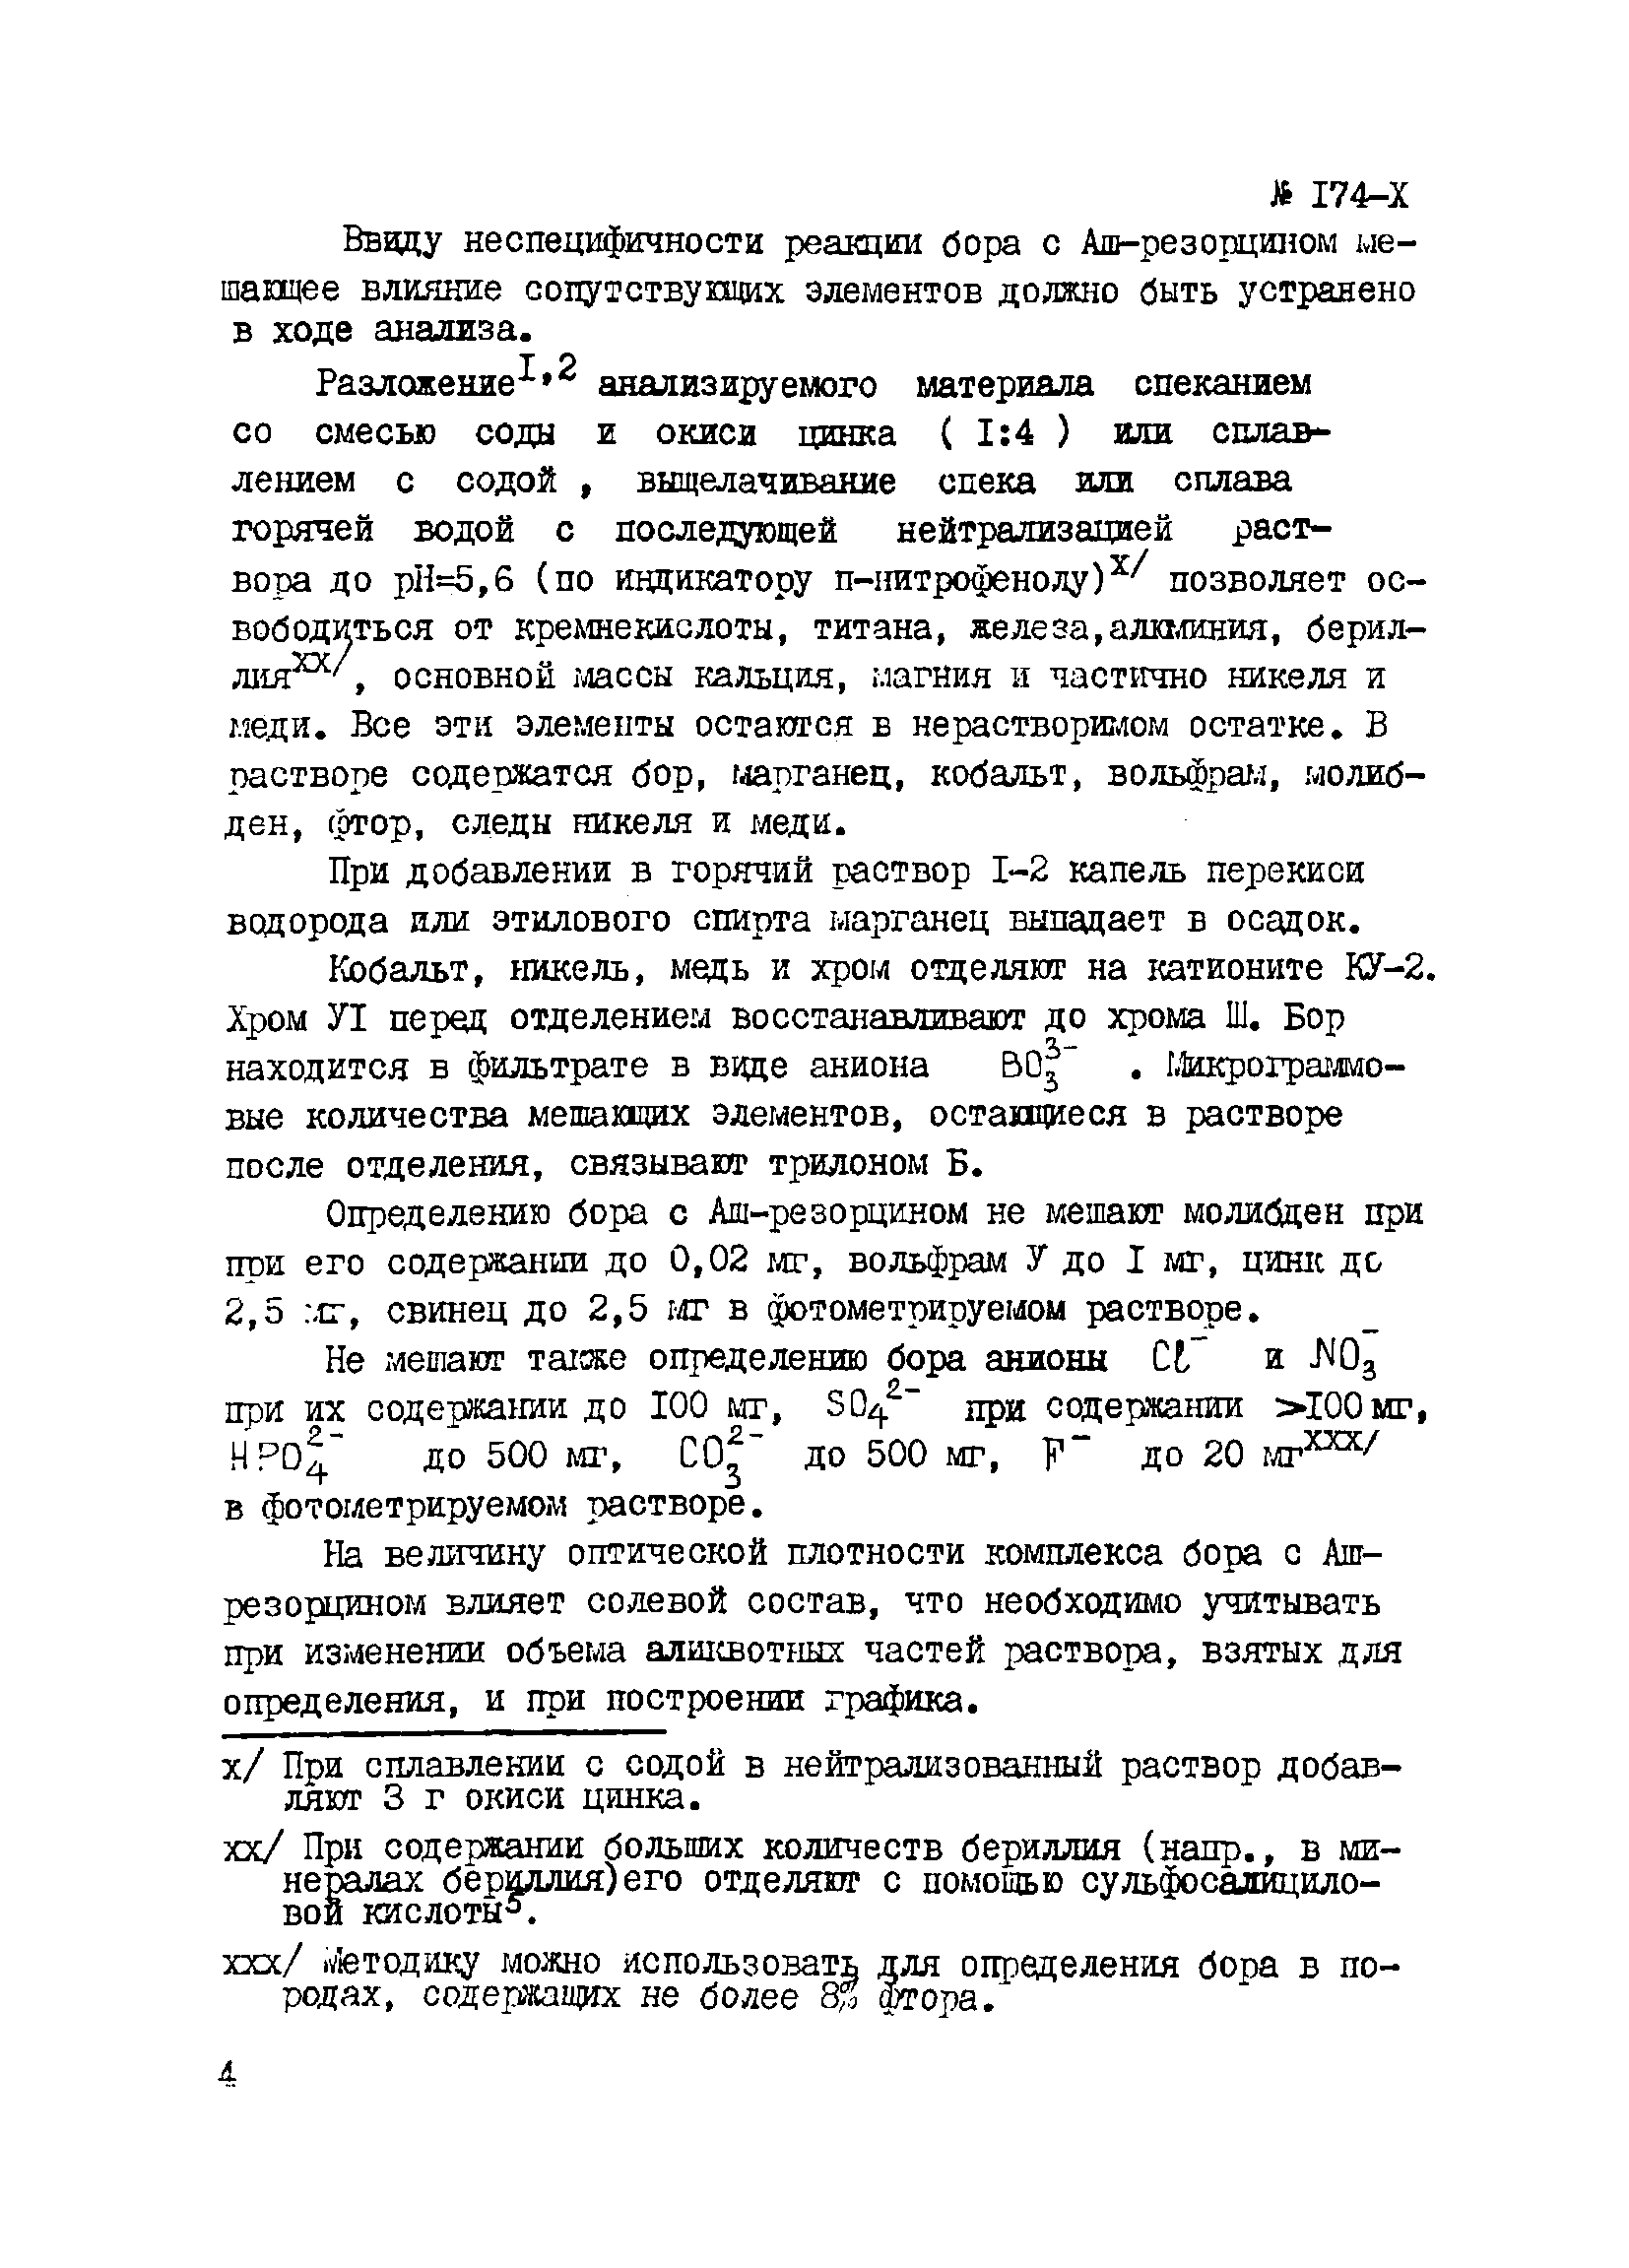 Инструкция НСАМ 174-Х